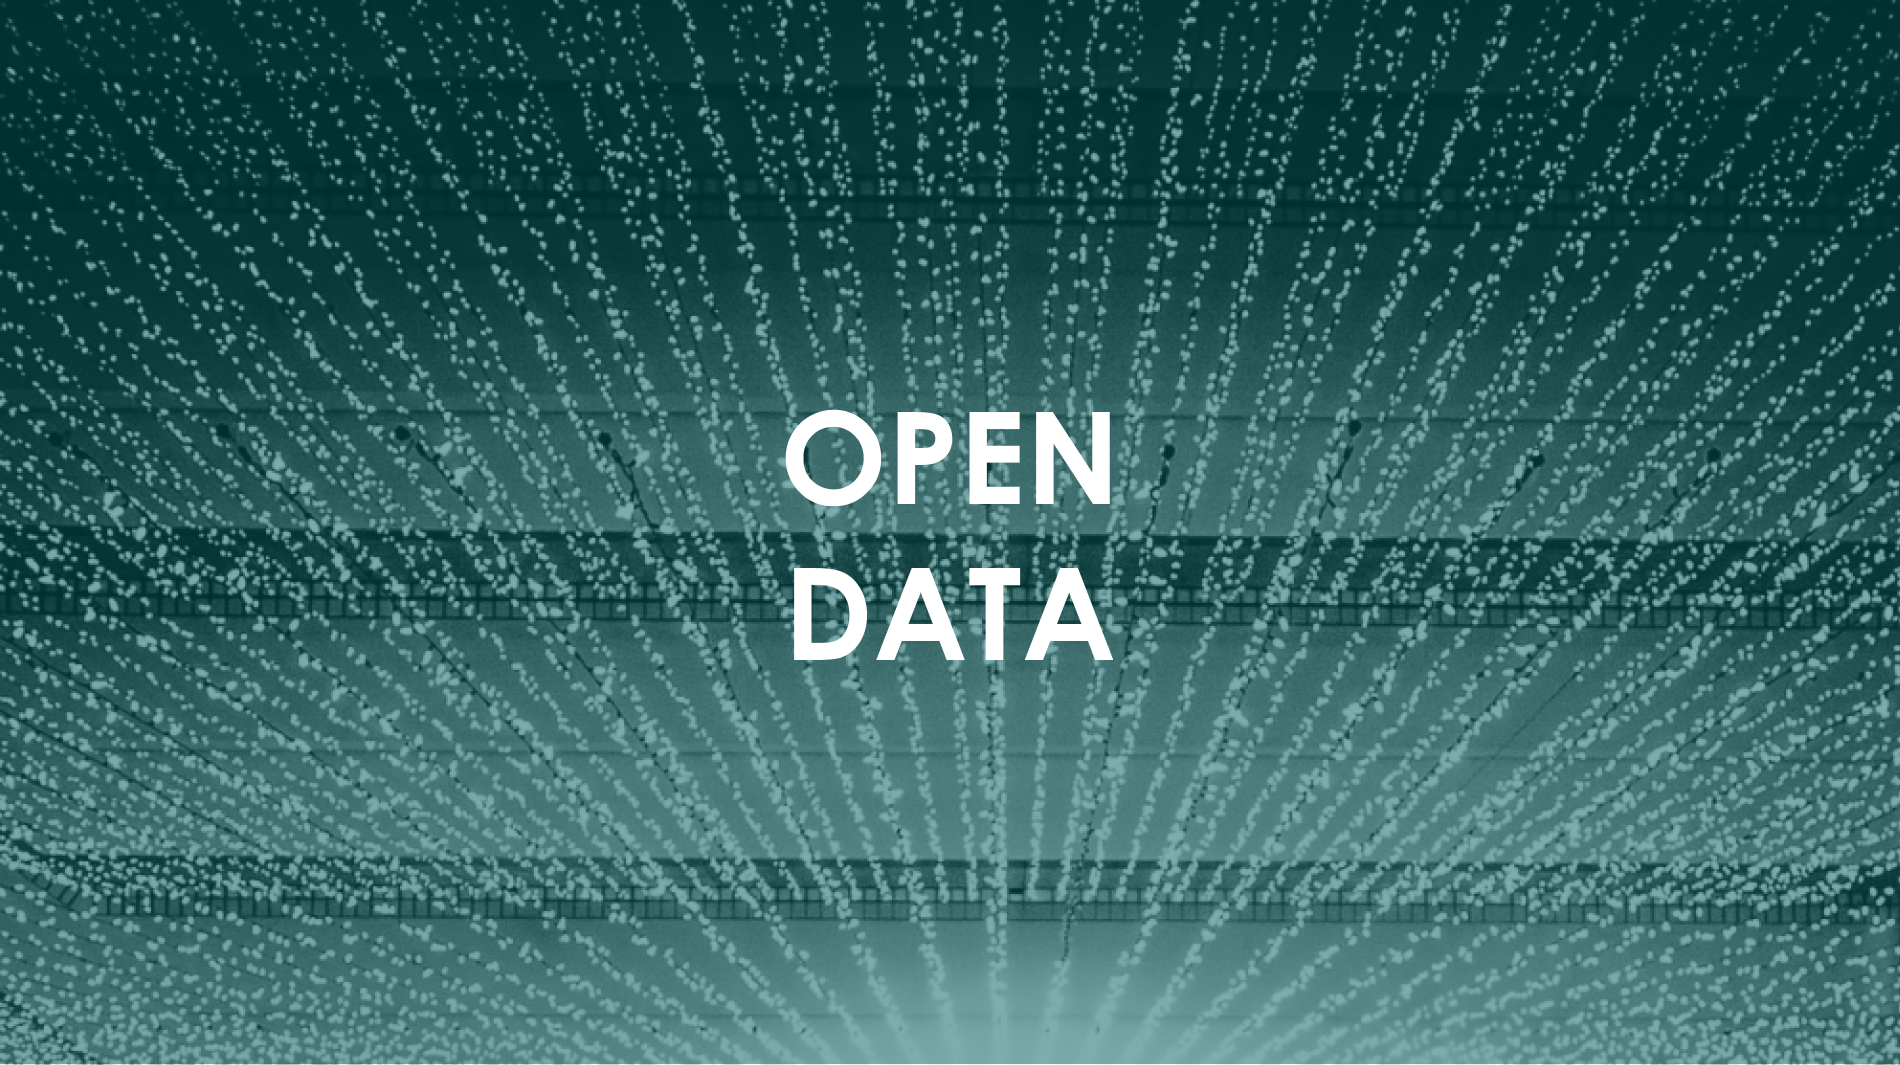 Tuineje Open Data